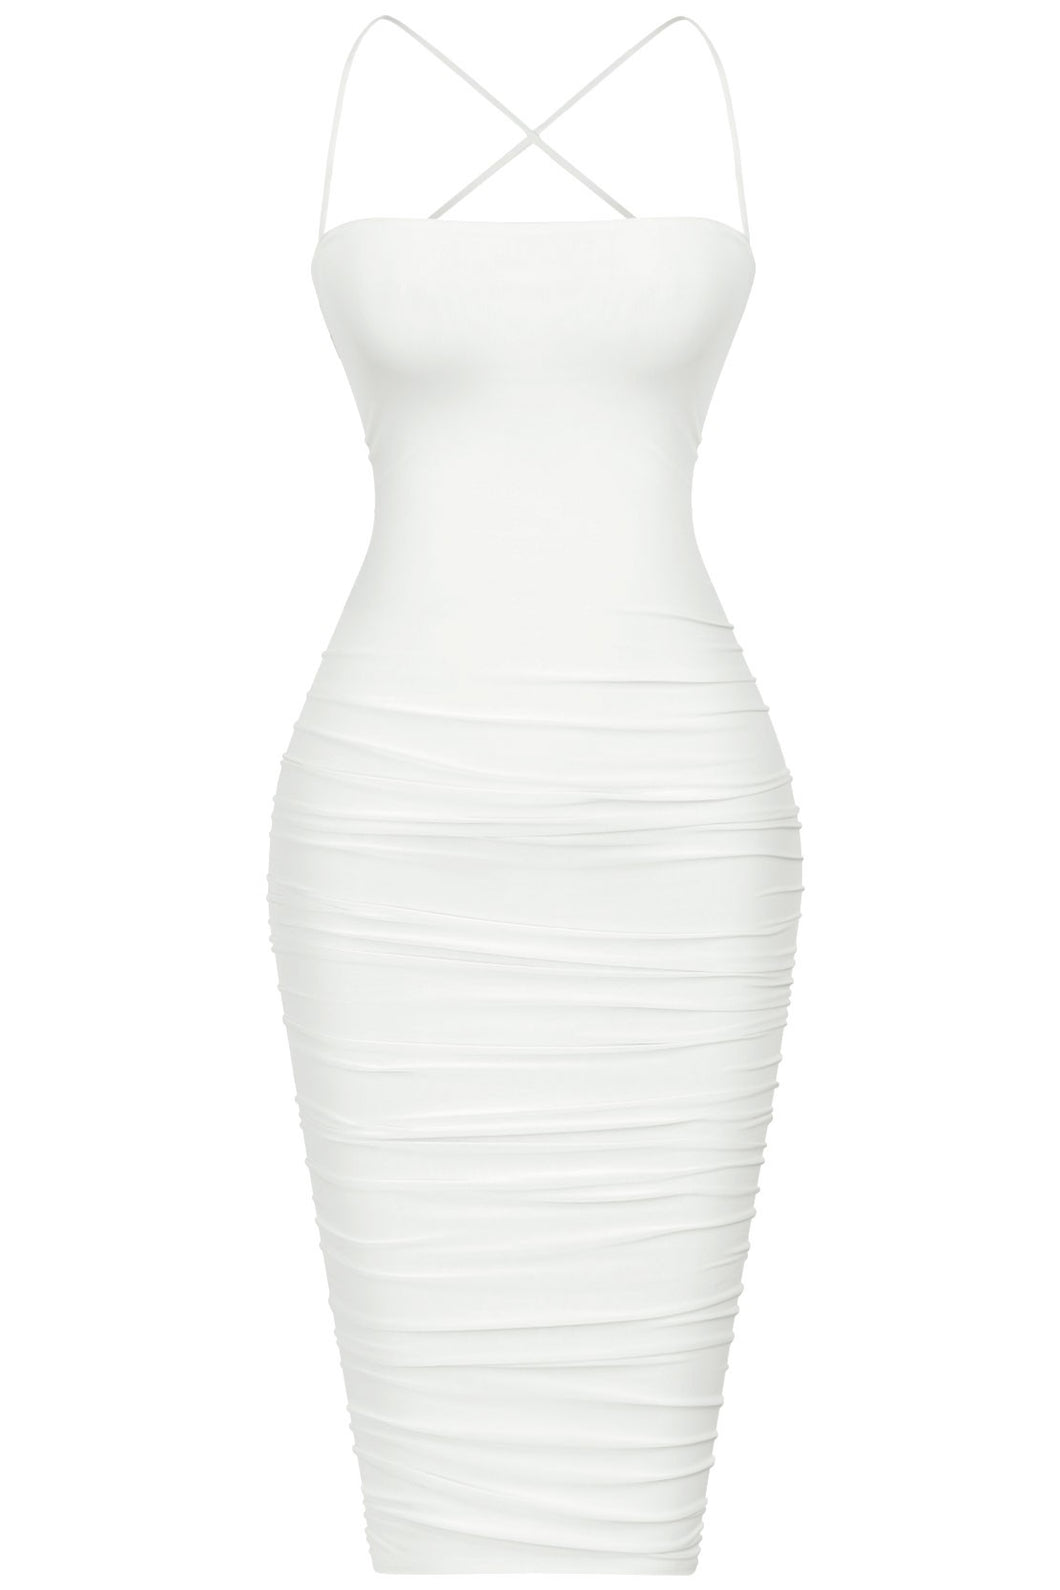 Miss Power Dress - White